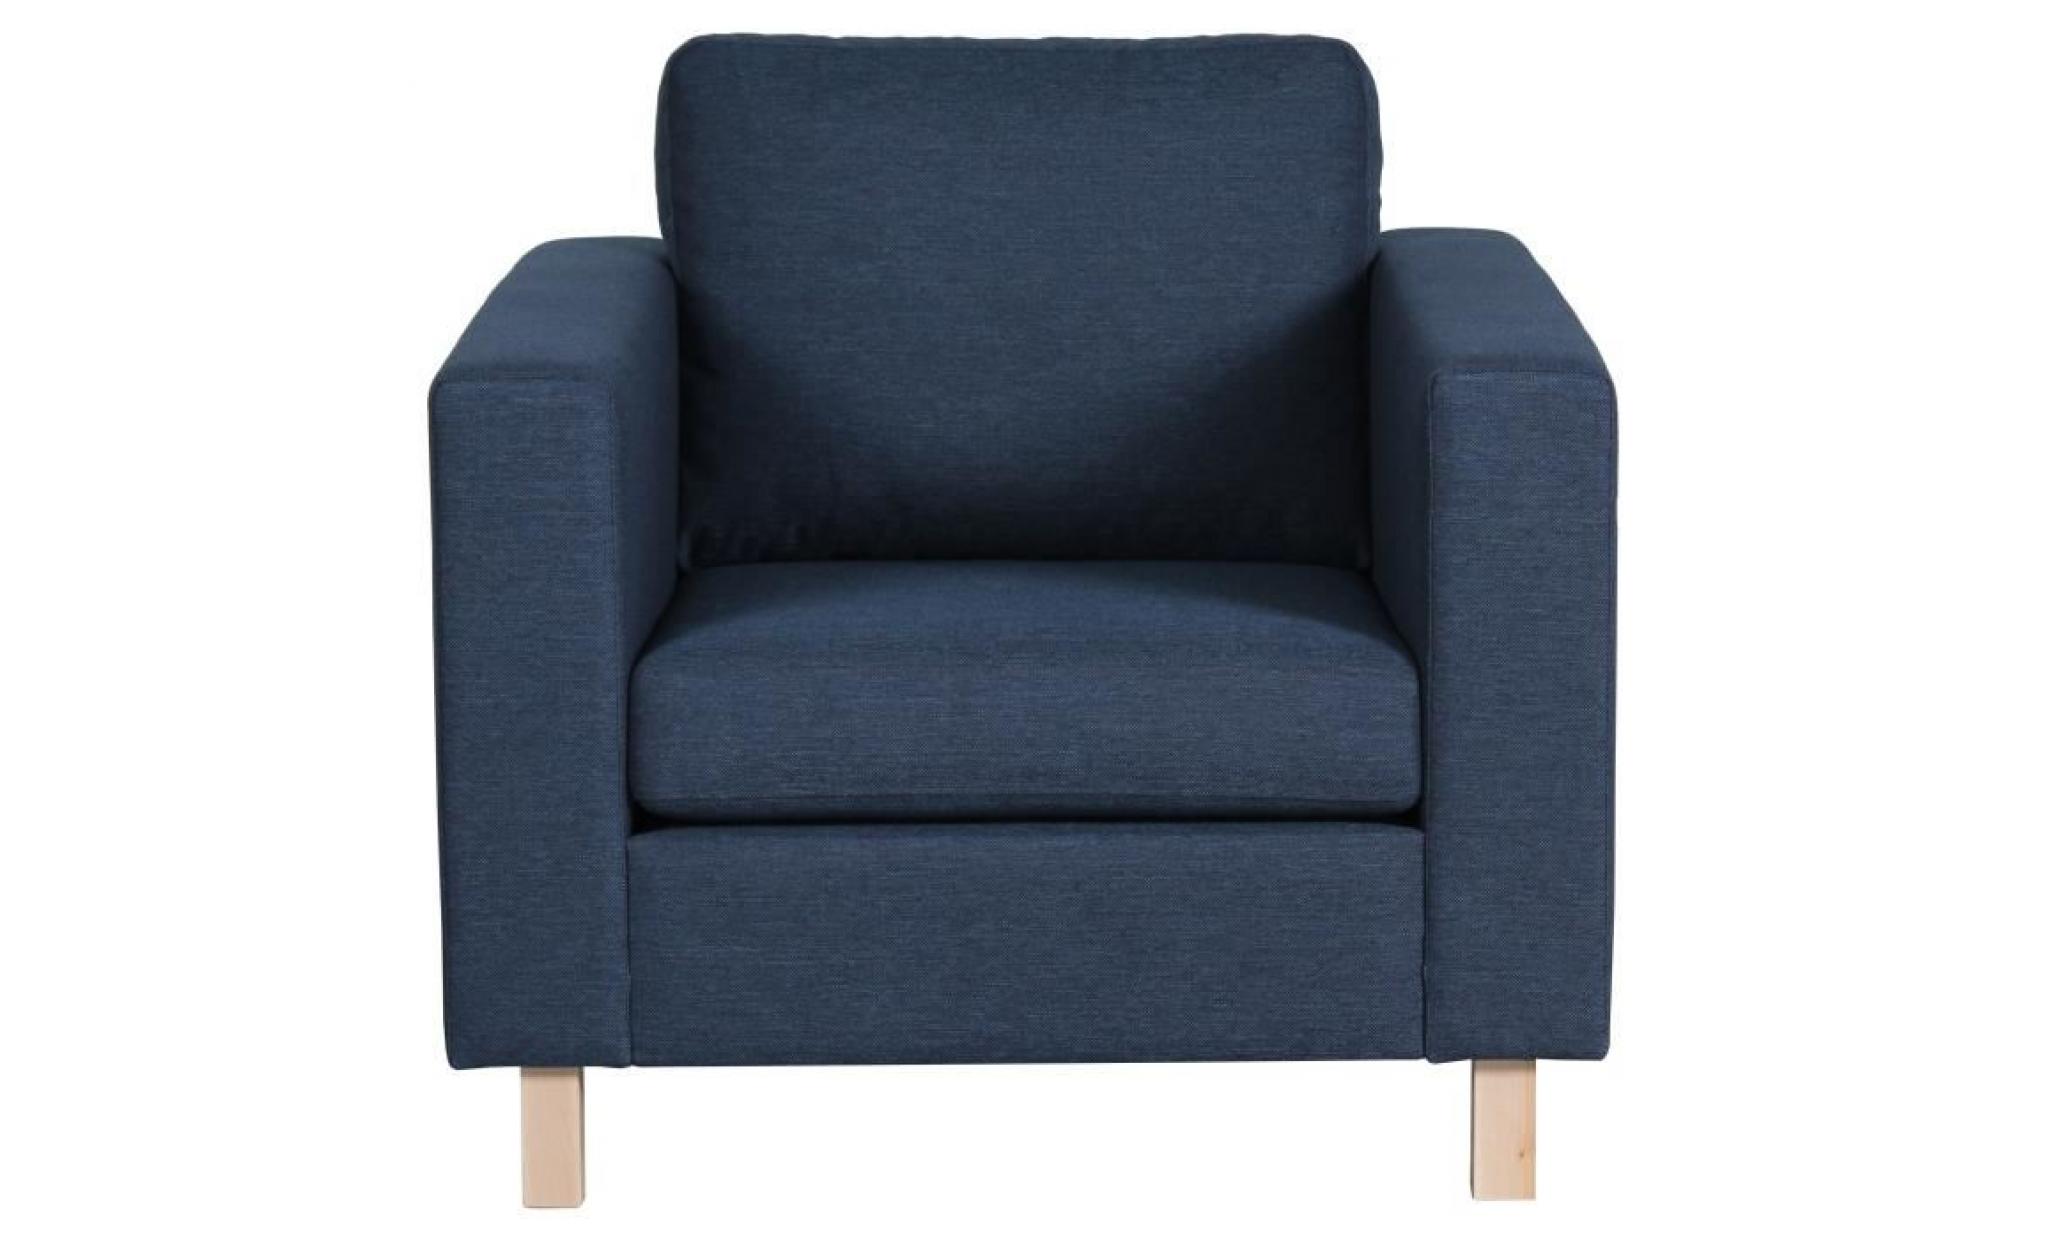 finlandek fauteuil sven   tissu bleu   scandinave   l 92 x p 92 cm pas cher